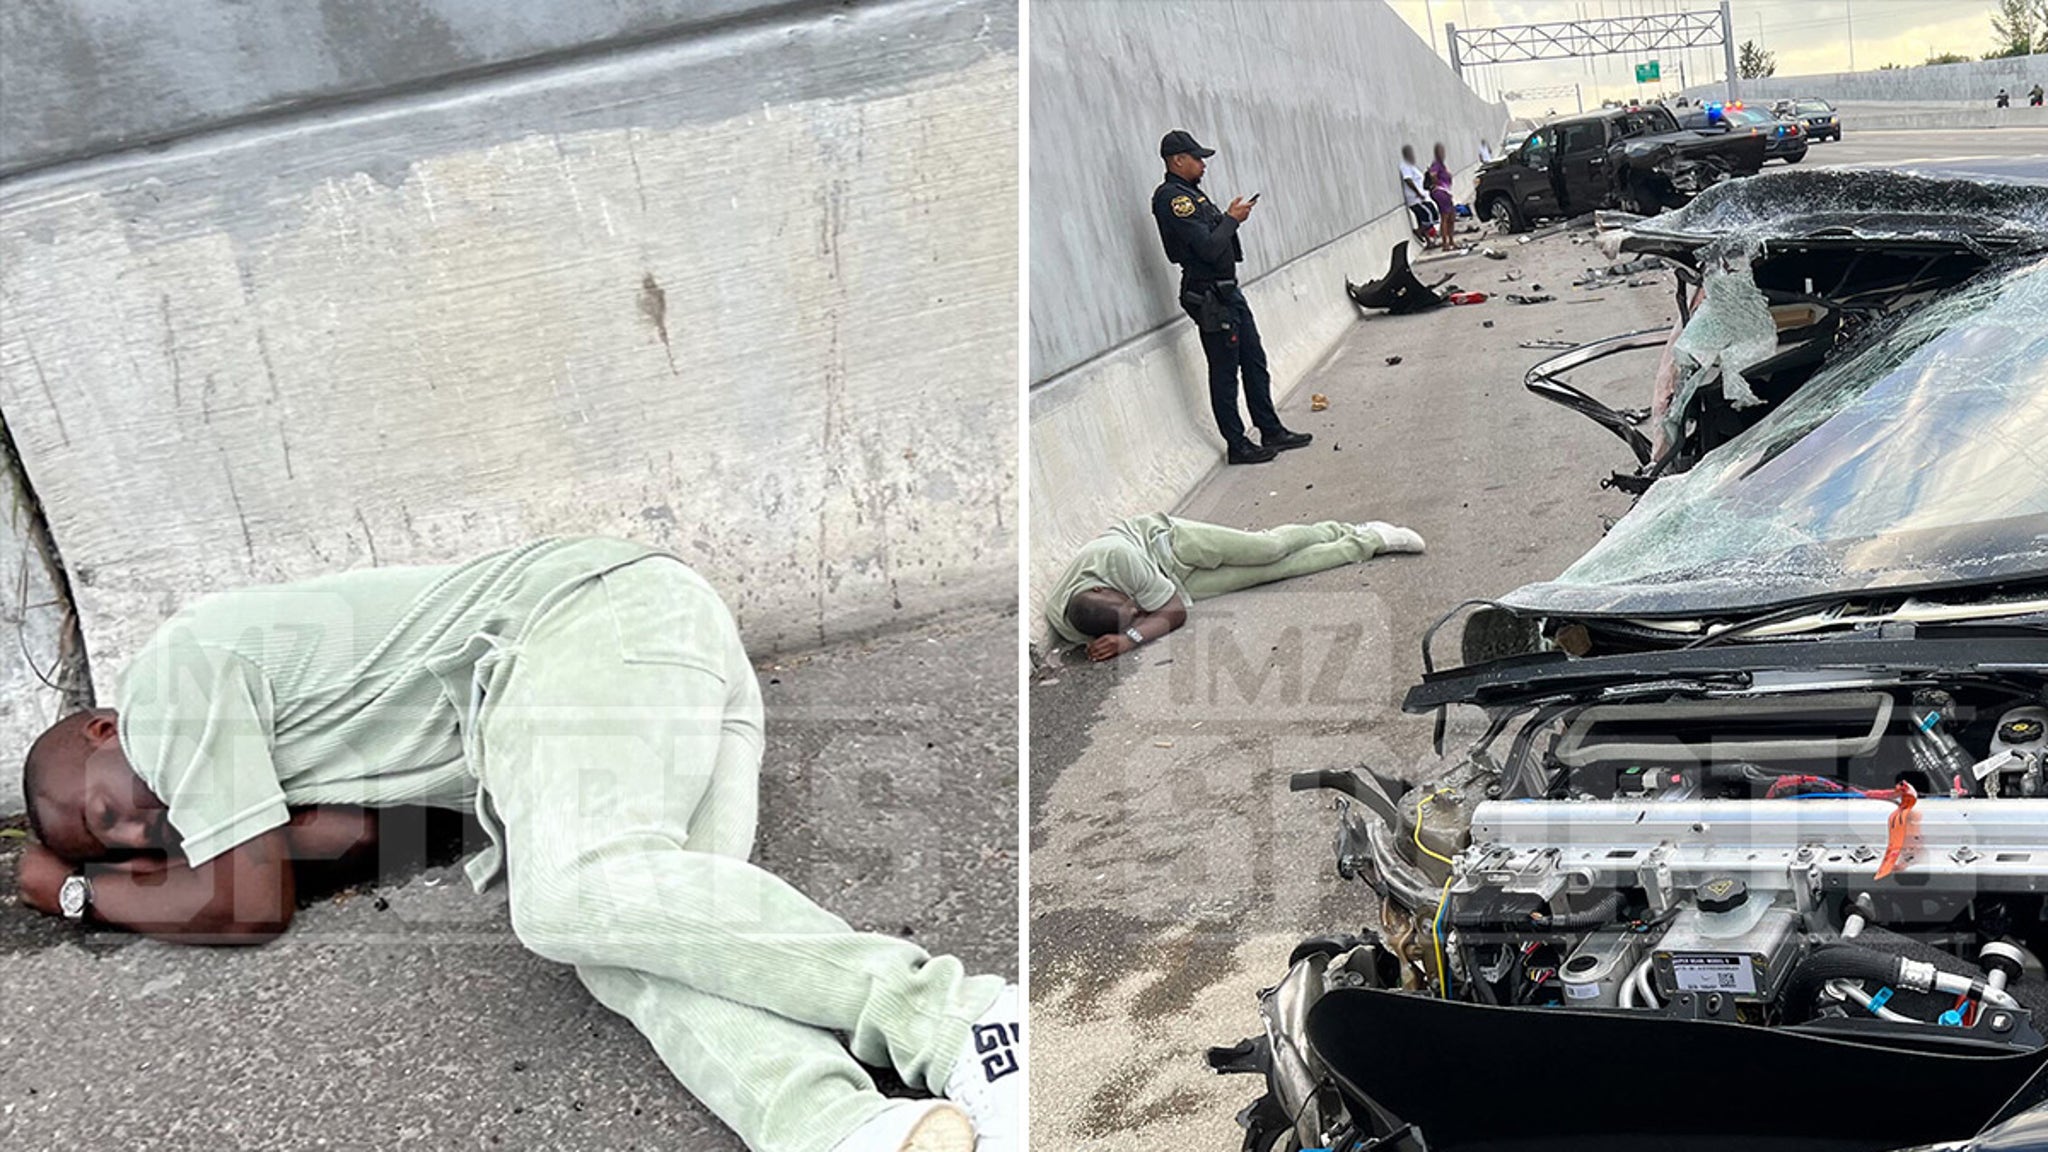 Vontae Davis Crash Scene Photos Show Ex-NFL Star Asleep Near Wrecked Cars thumbnail